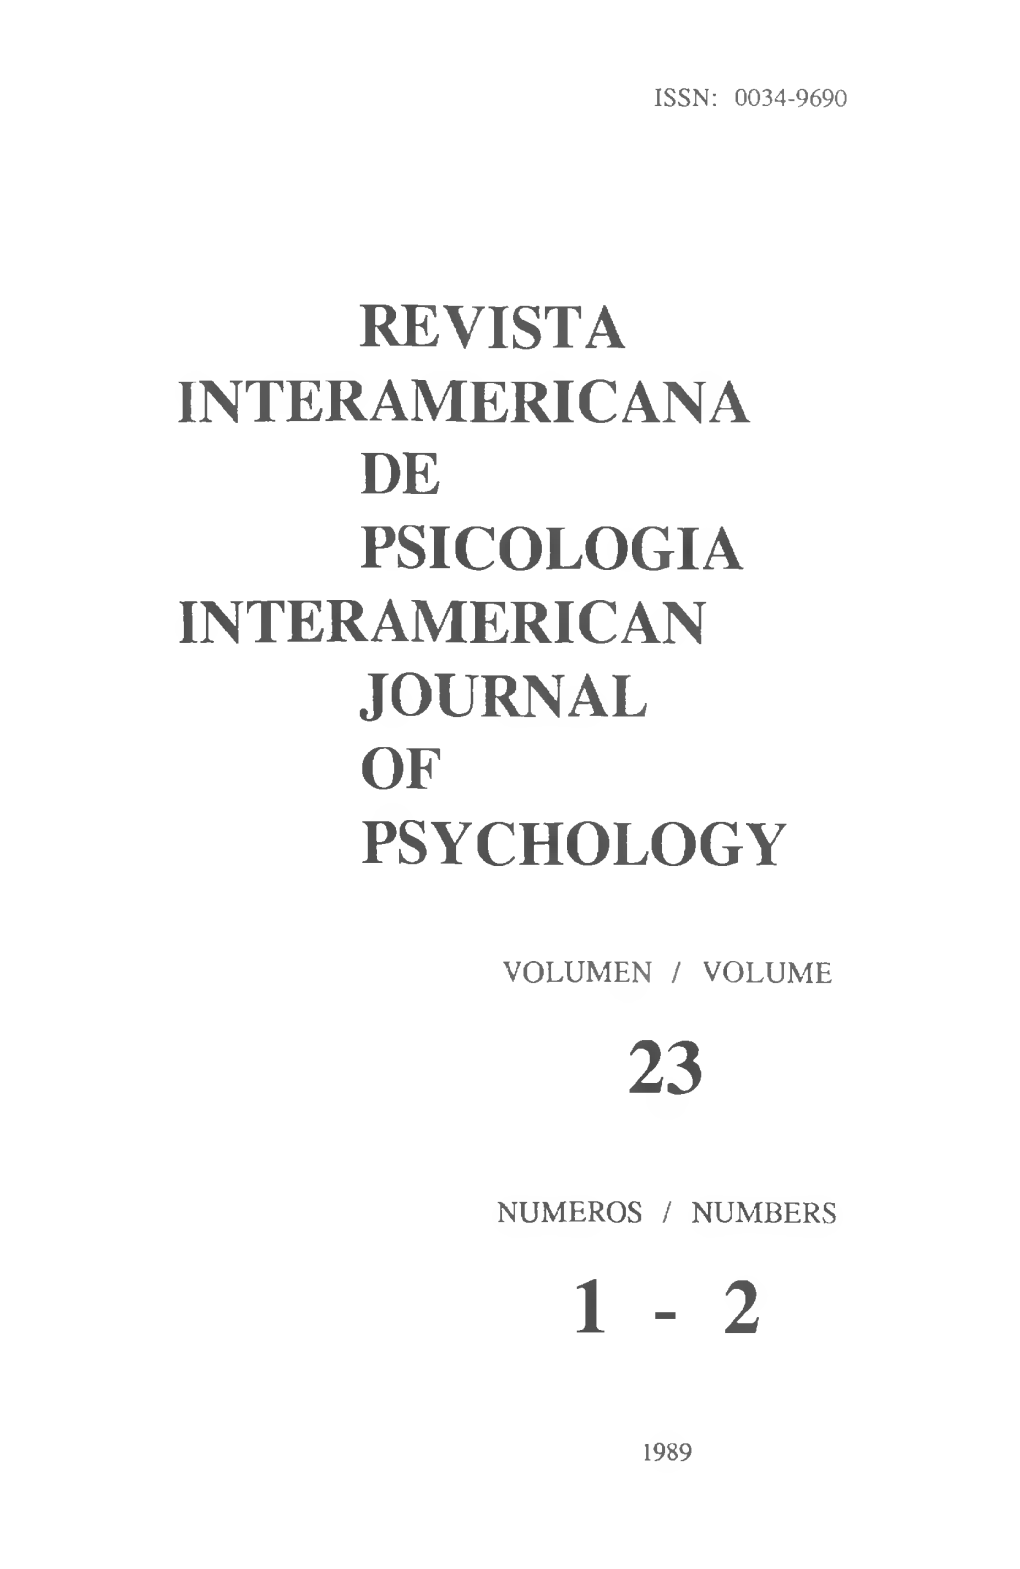 Re Vista Interamericana De Psicologia Interamerican Journal of Ps Y Chology